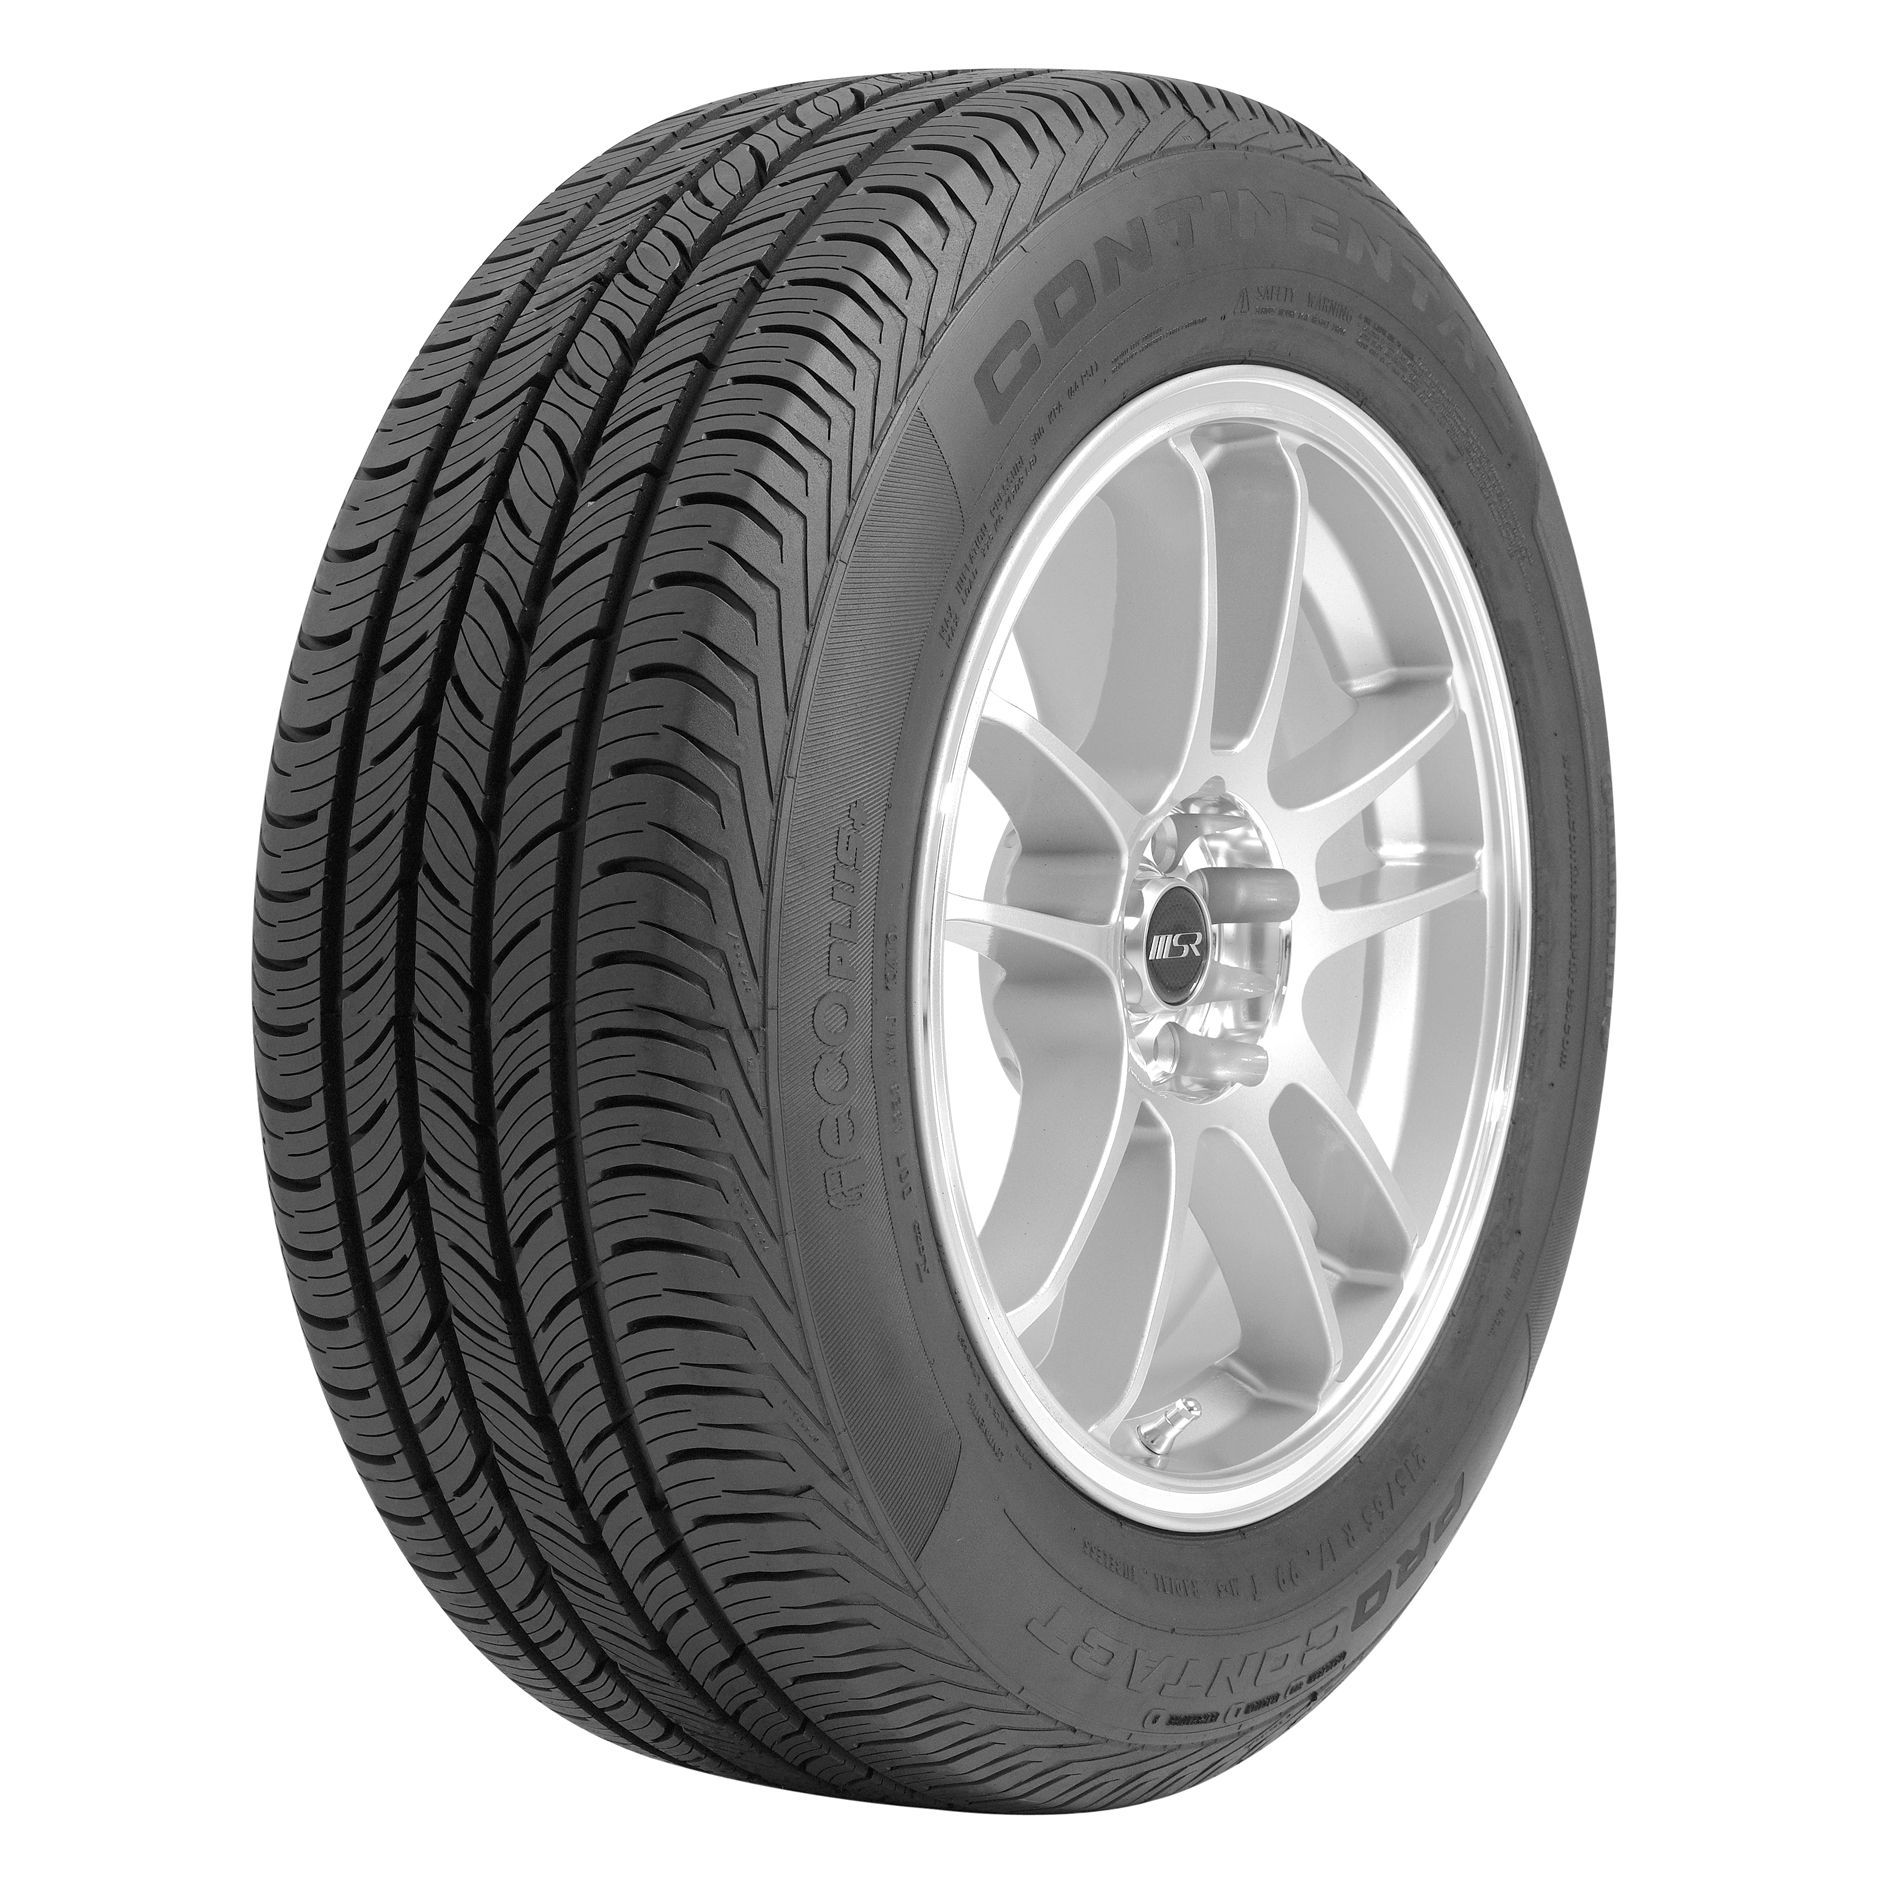 Continental Pro Contact Eco Plus - 235/55R17 99T BW - All-Season Tire